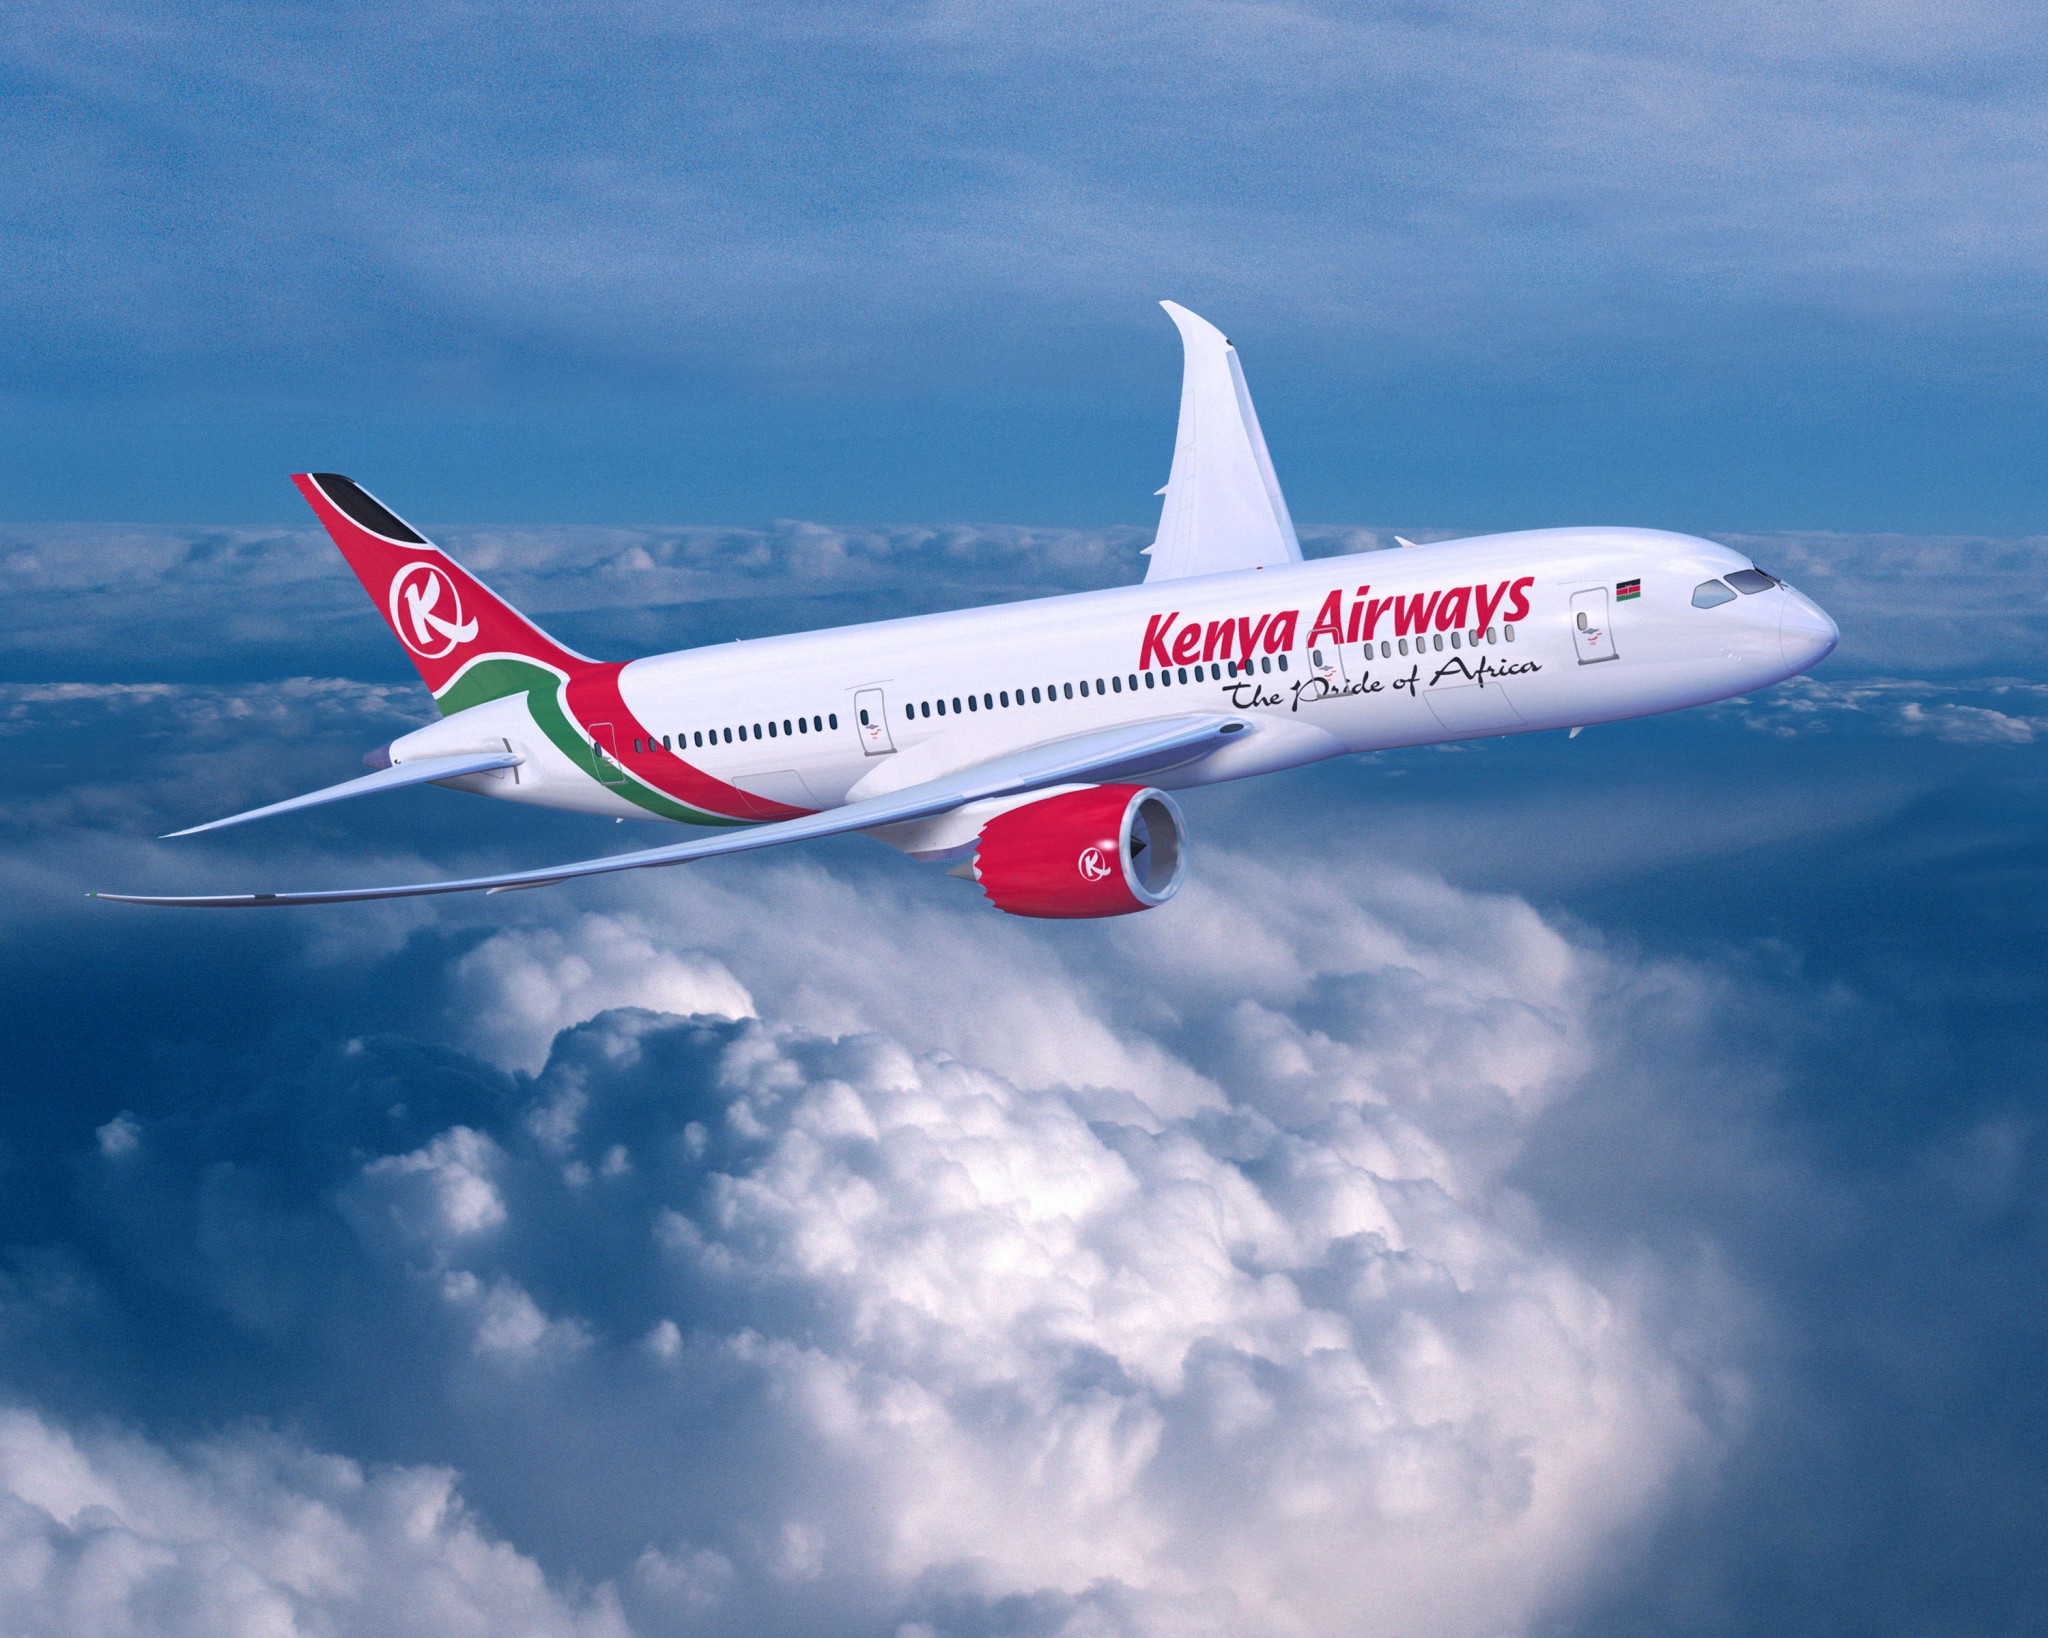 COMESA- Partnership between Kenya Airways and SAA will be considered a merger